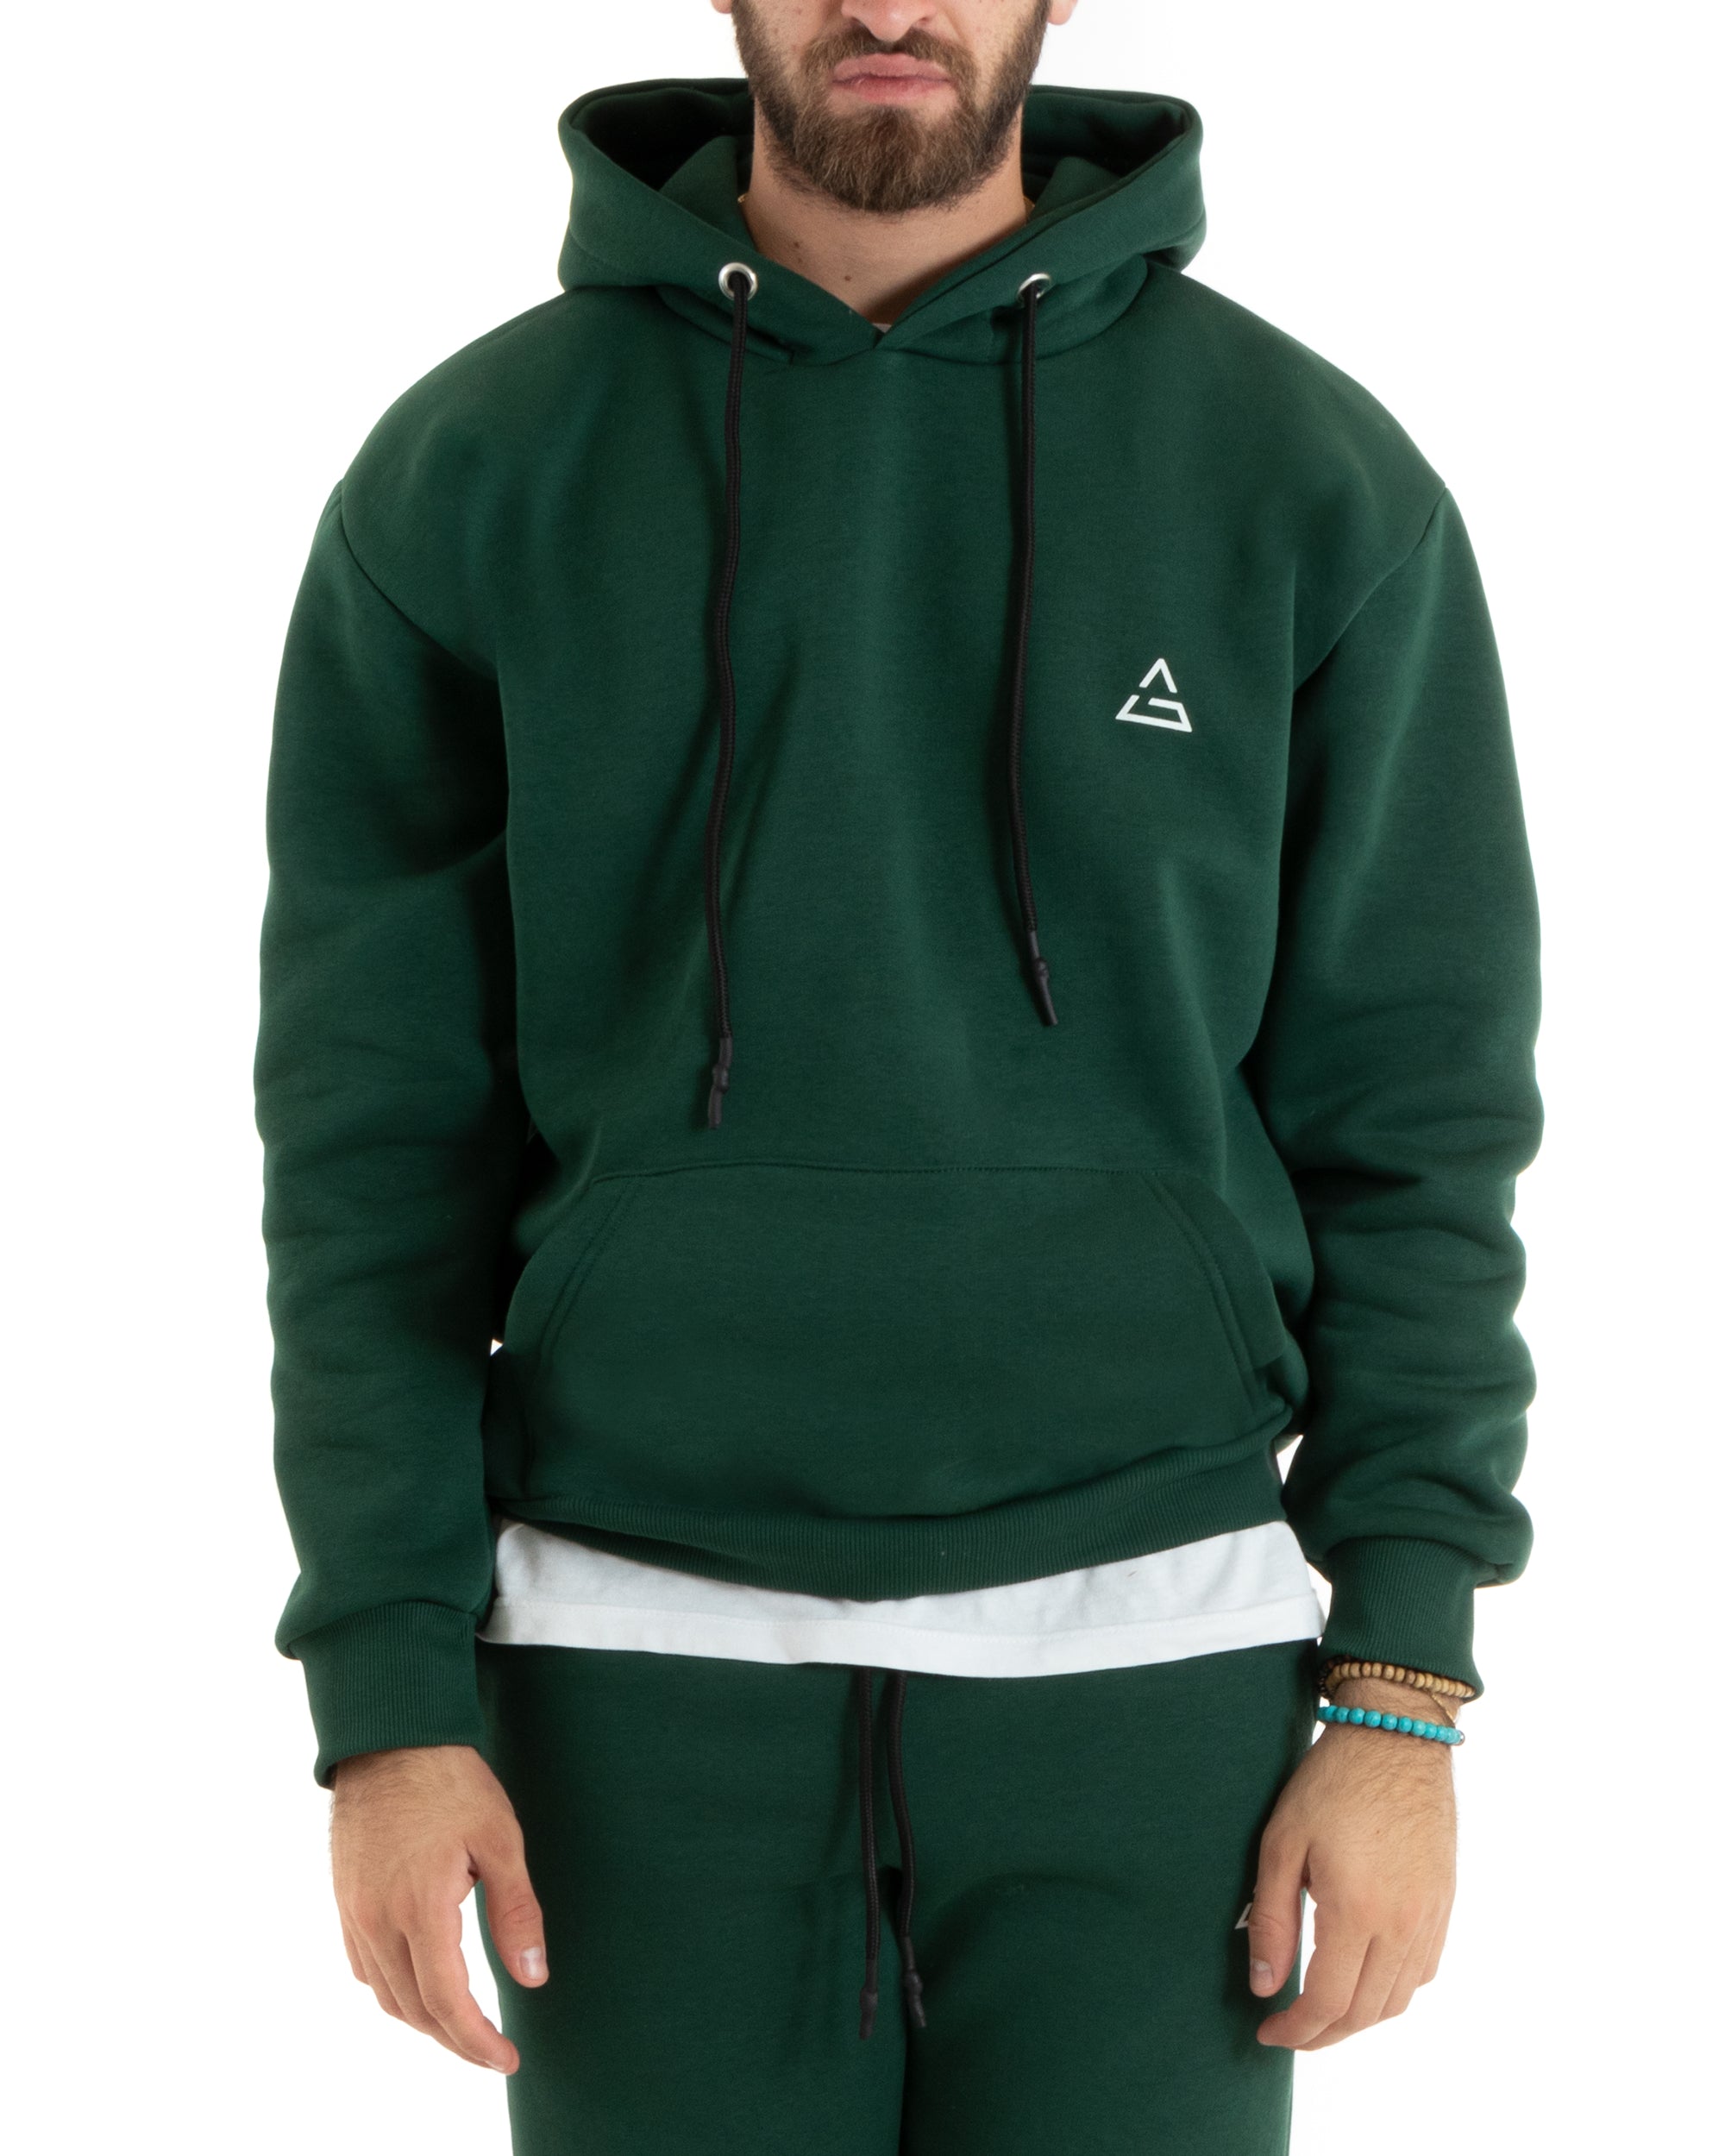 Men's Hooded Sweatshirt Basic Sweatshirt Solid Color Green Regular Fit GIOSAL-F2883A